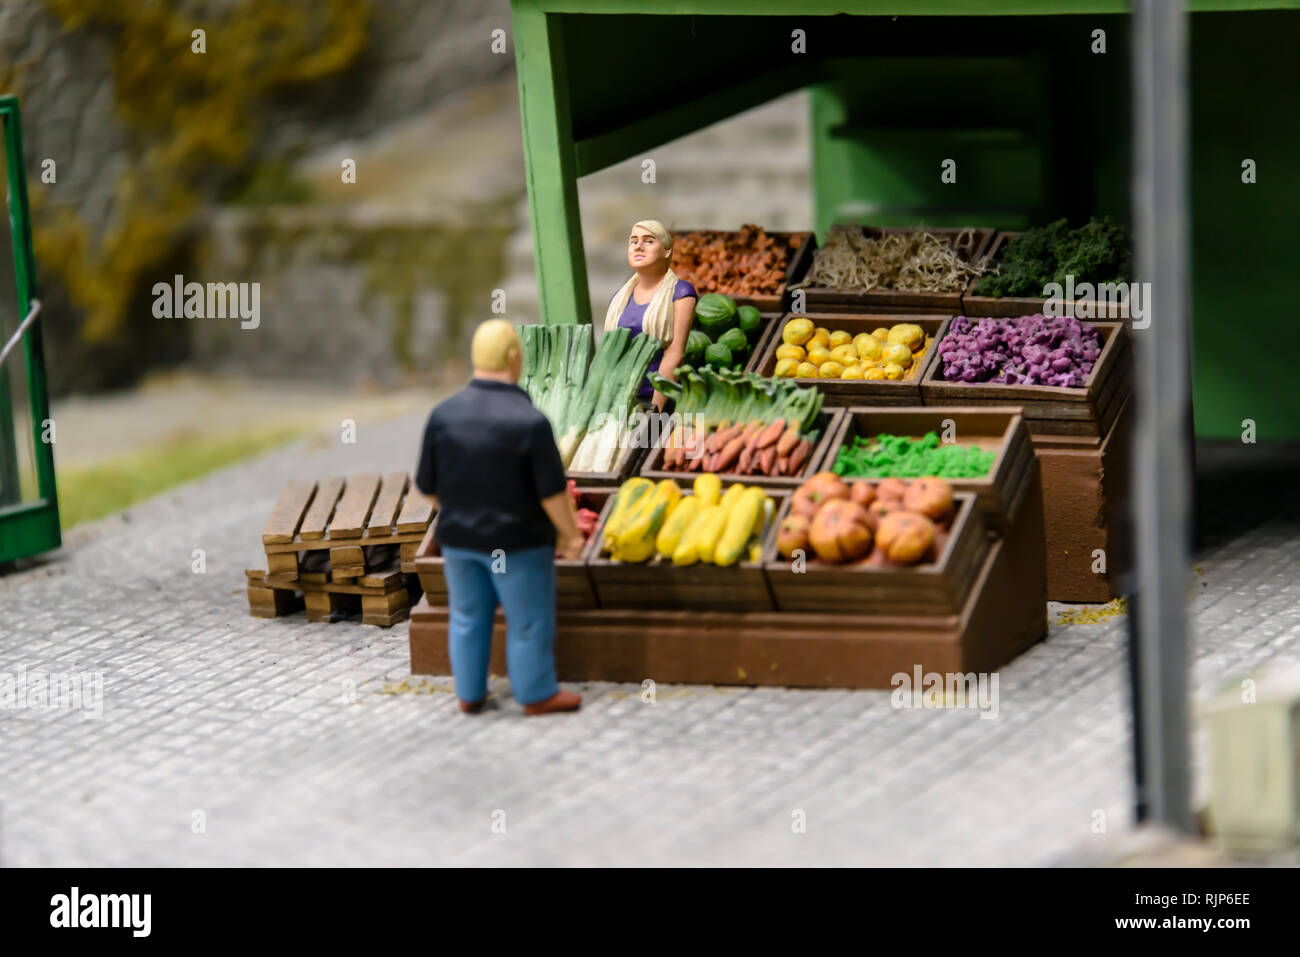 Miniatur Modell eines Lebensmittelgeschäft Marktstand, an Kolejkowo, Breslau, Breslau, Wroclaw, Polen Stockfoto